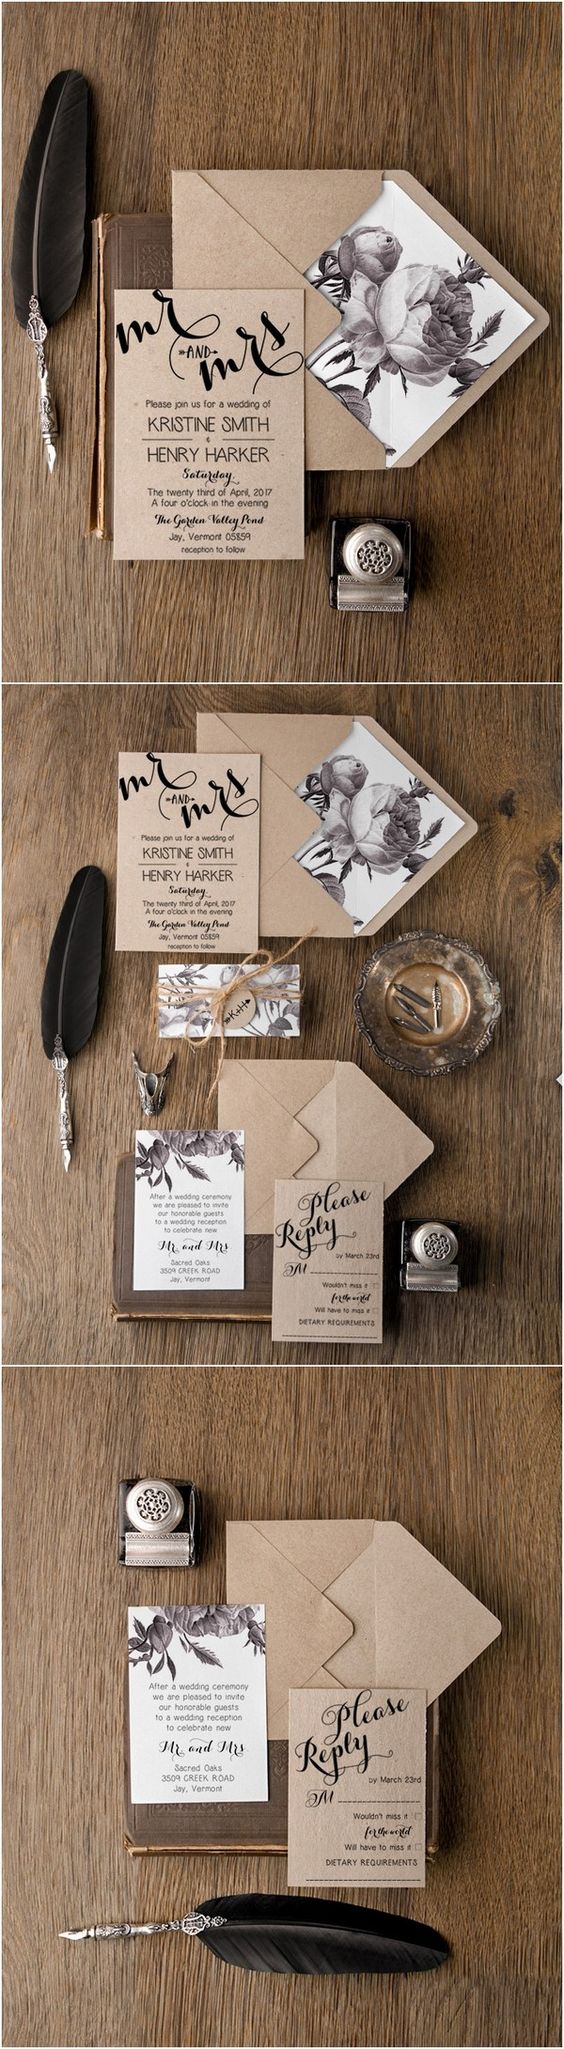 Rustic simple wedding invitations